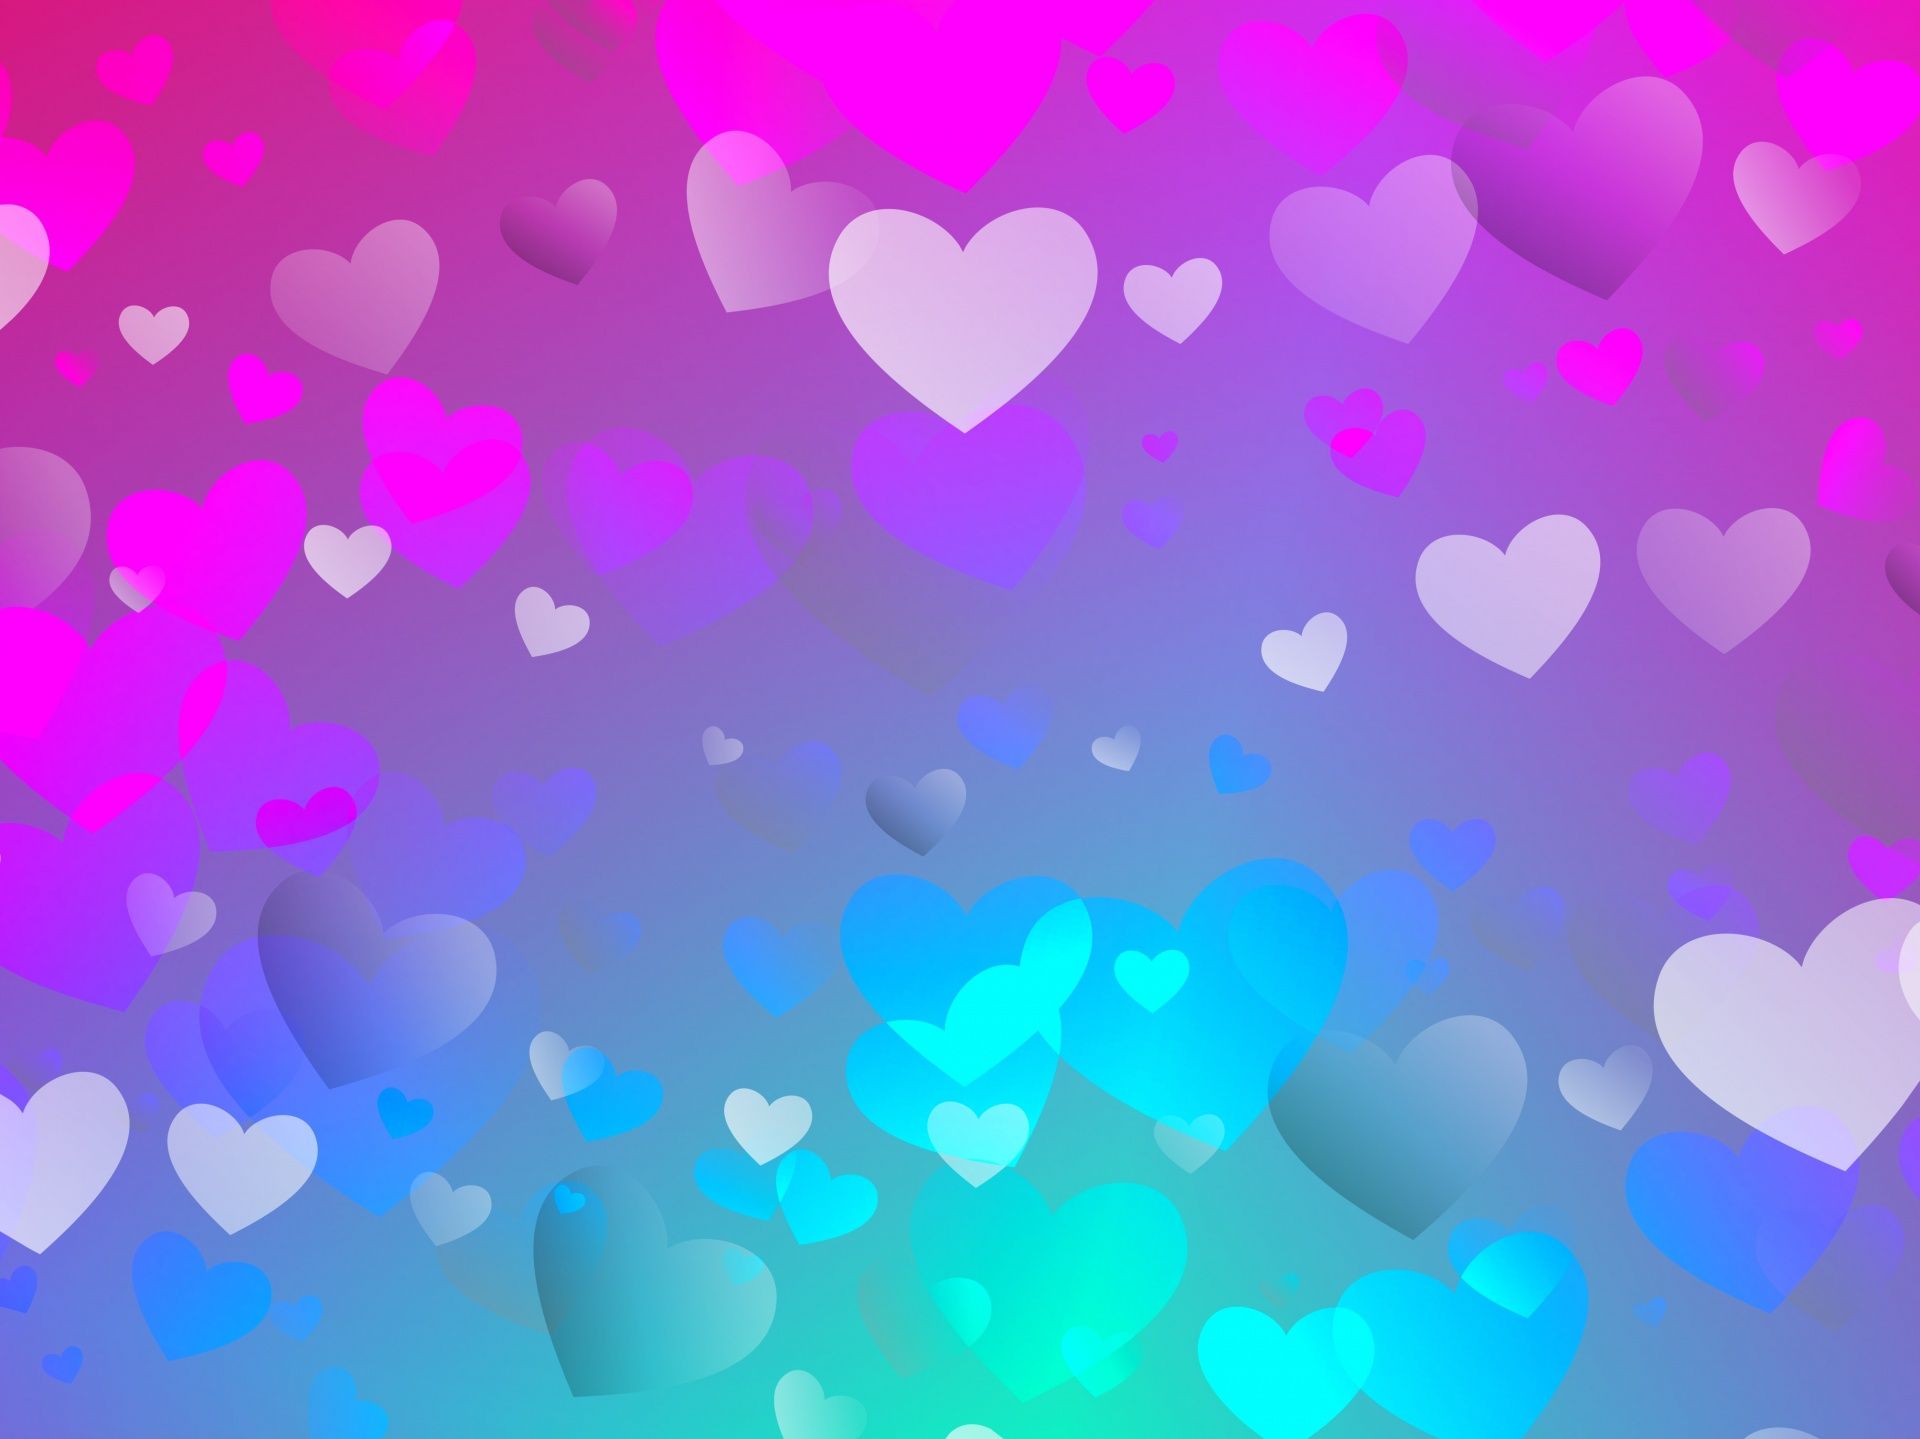 Pink Hearts Free Domain Picture. Valentine background, Portfolio cover design, Blue heart